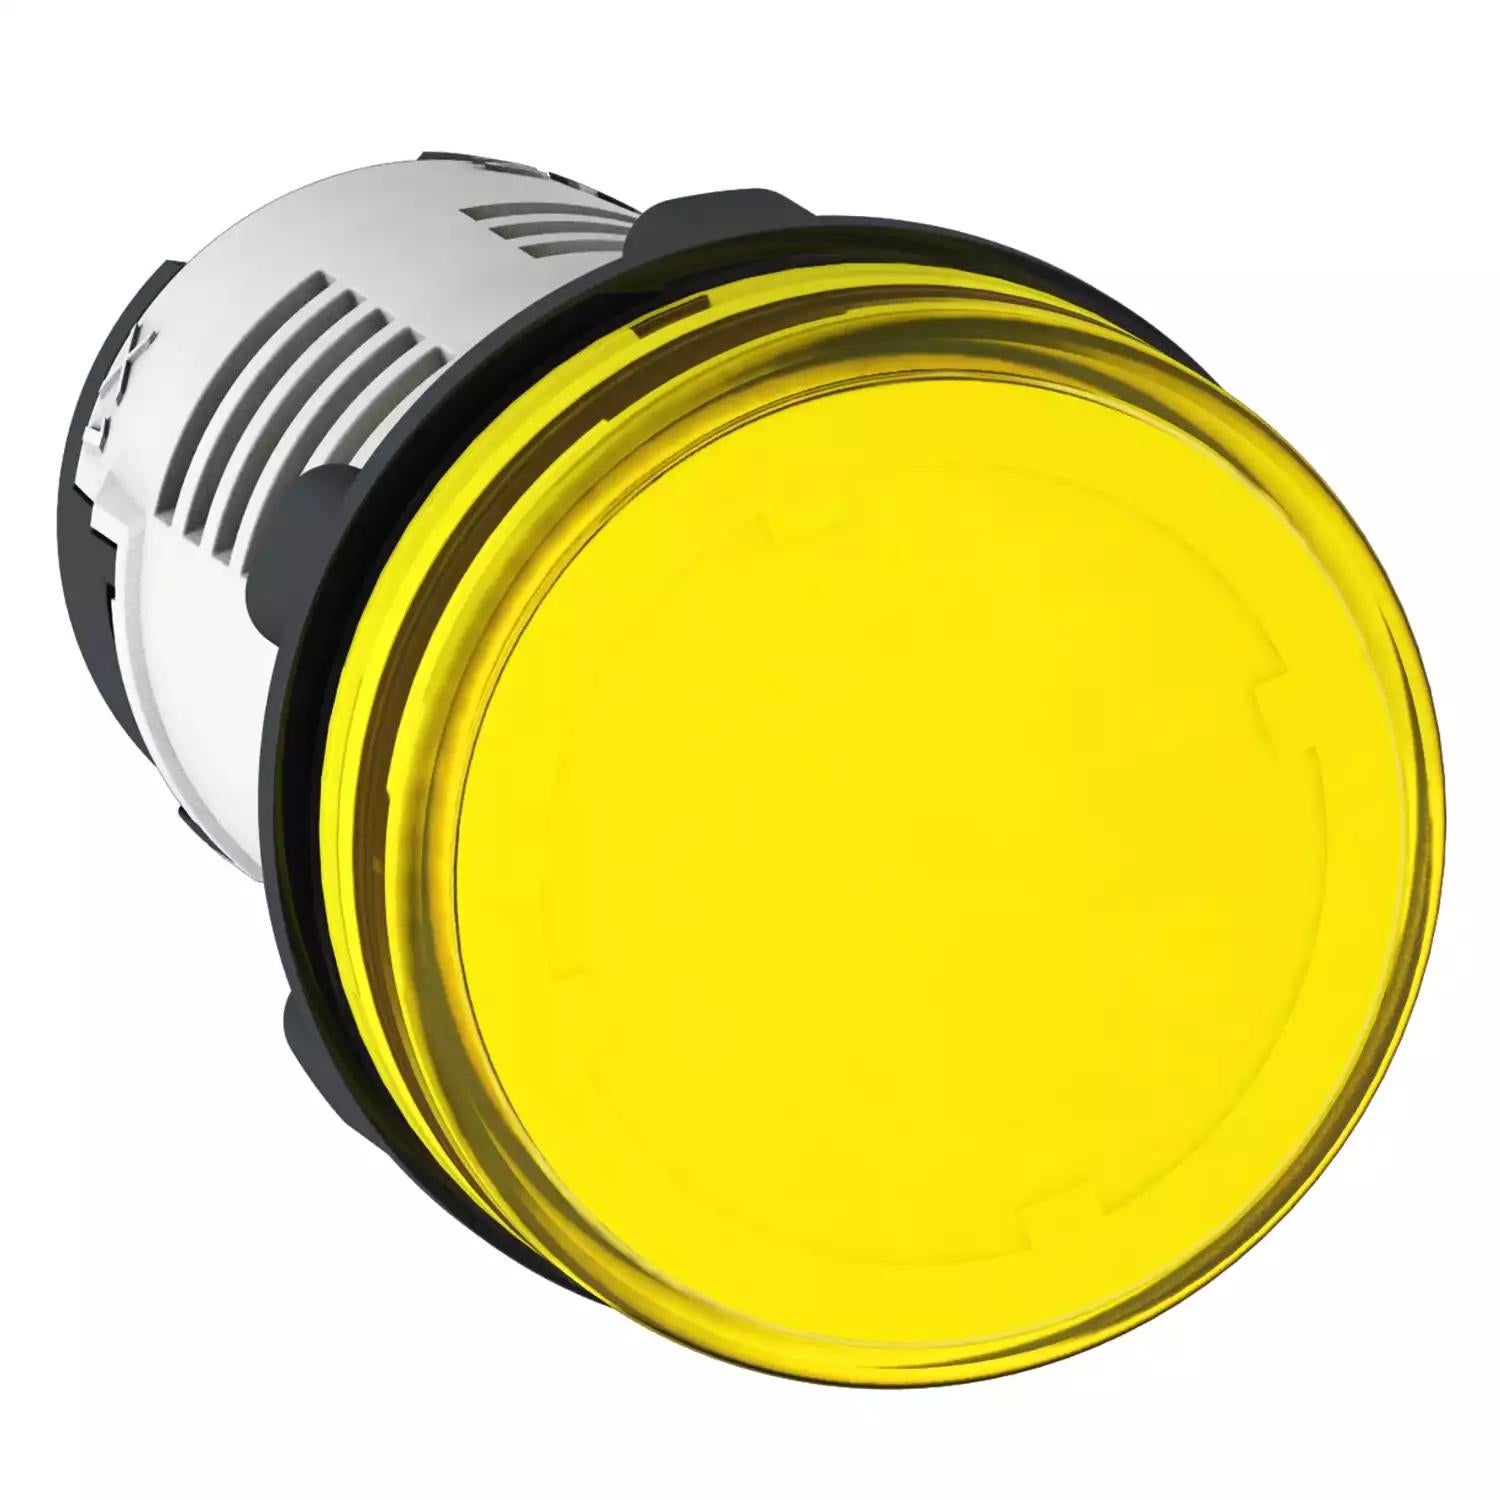 Harmony XB7, Monolithic pilot light, plastic, yellow, Ø22, integral LED, 110...120 V AC